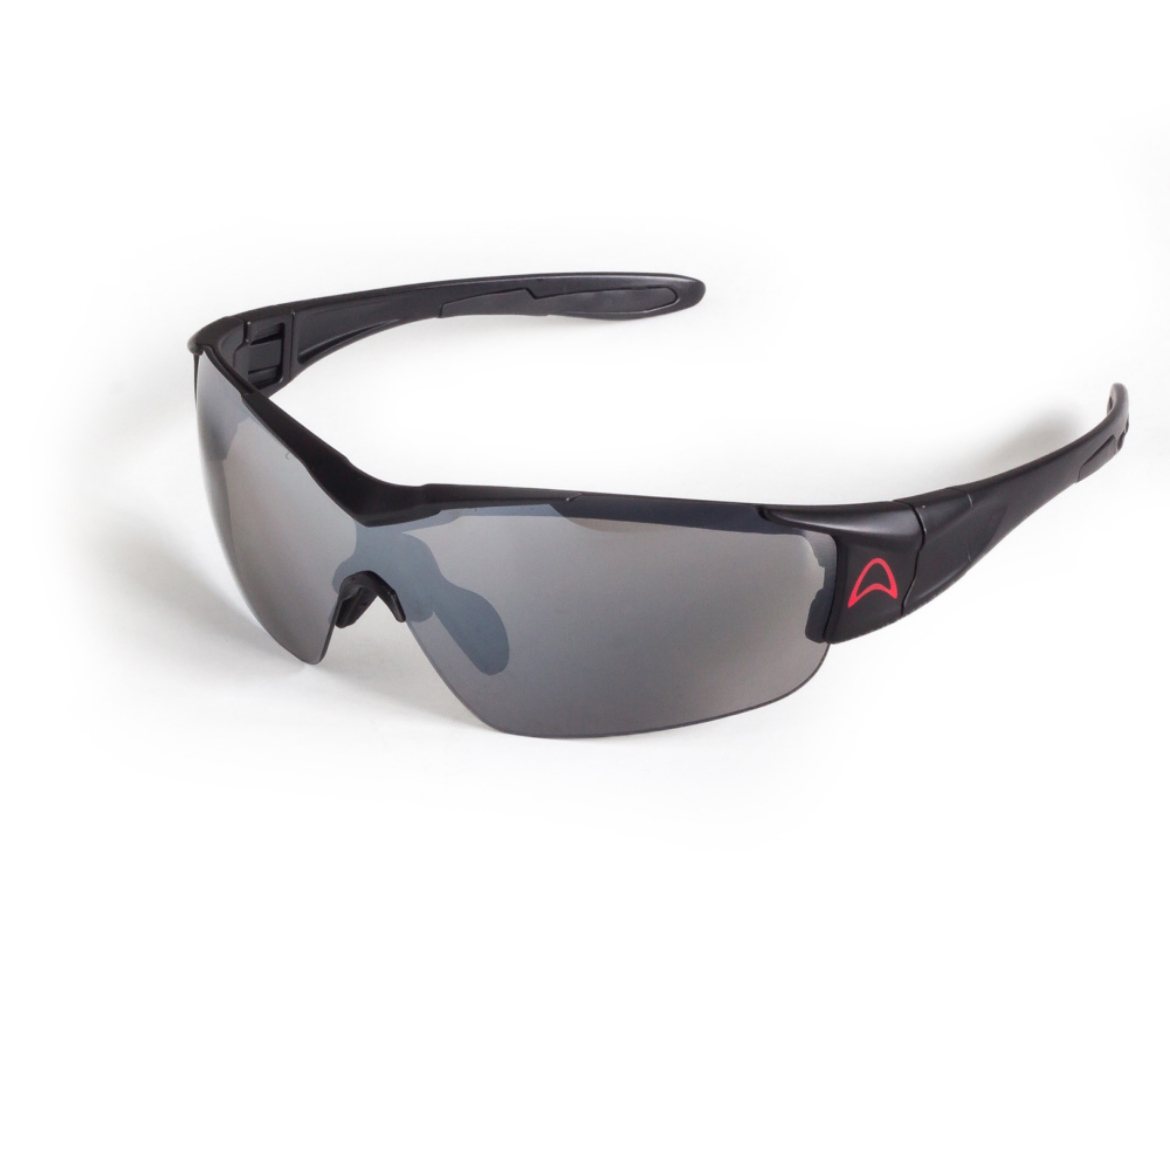 Picture of Akando Extreme 3 Sunglasses